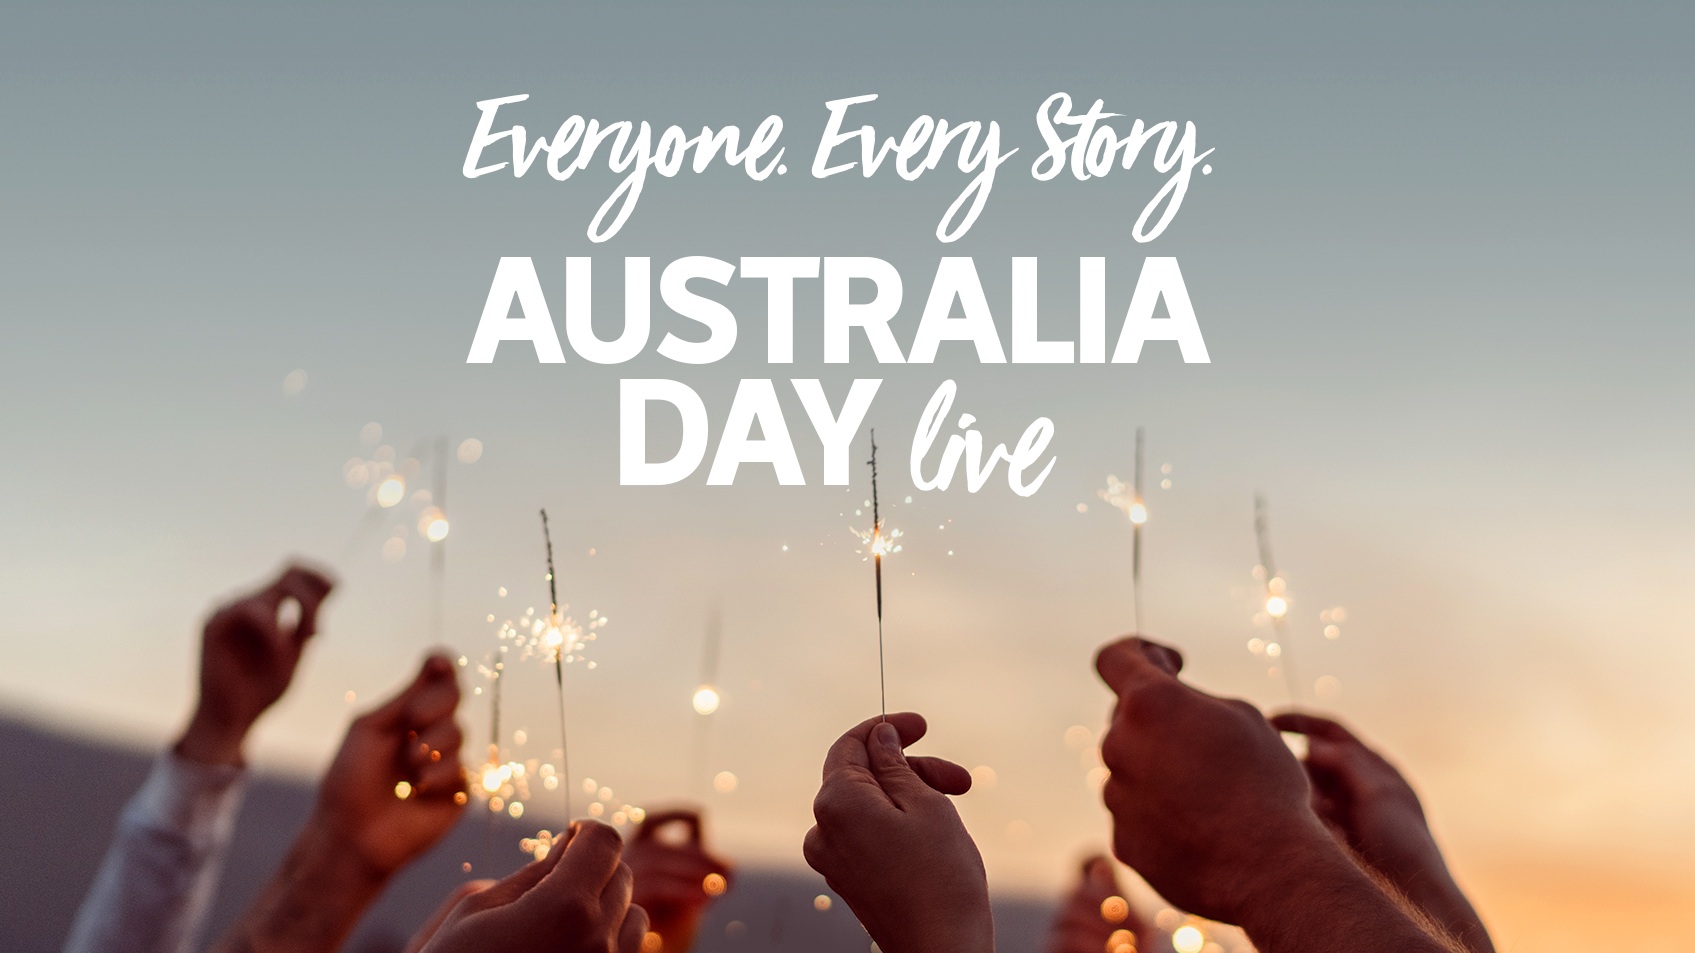   Australia Day Live  image - ABC 